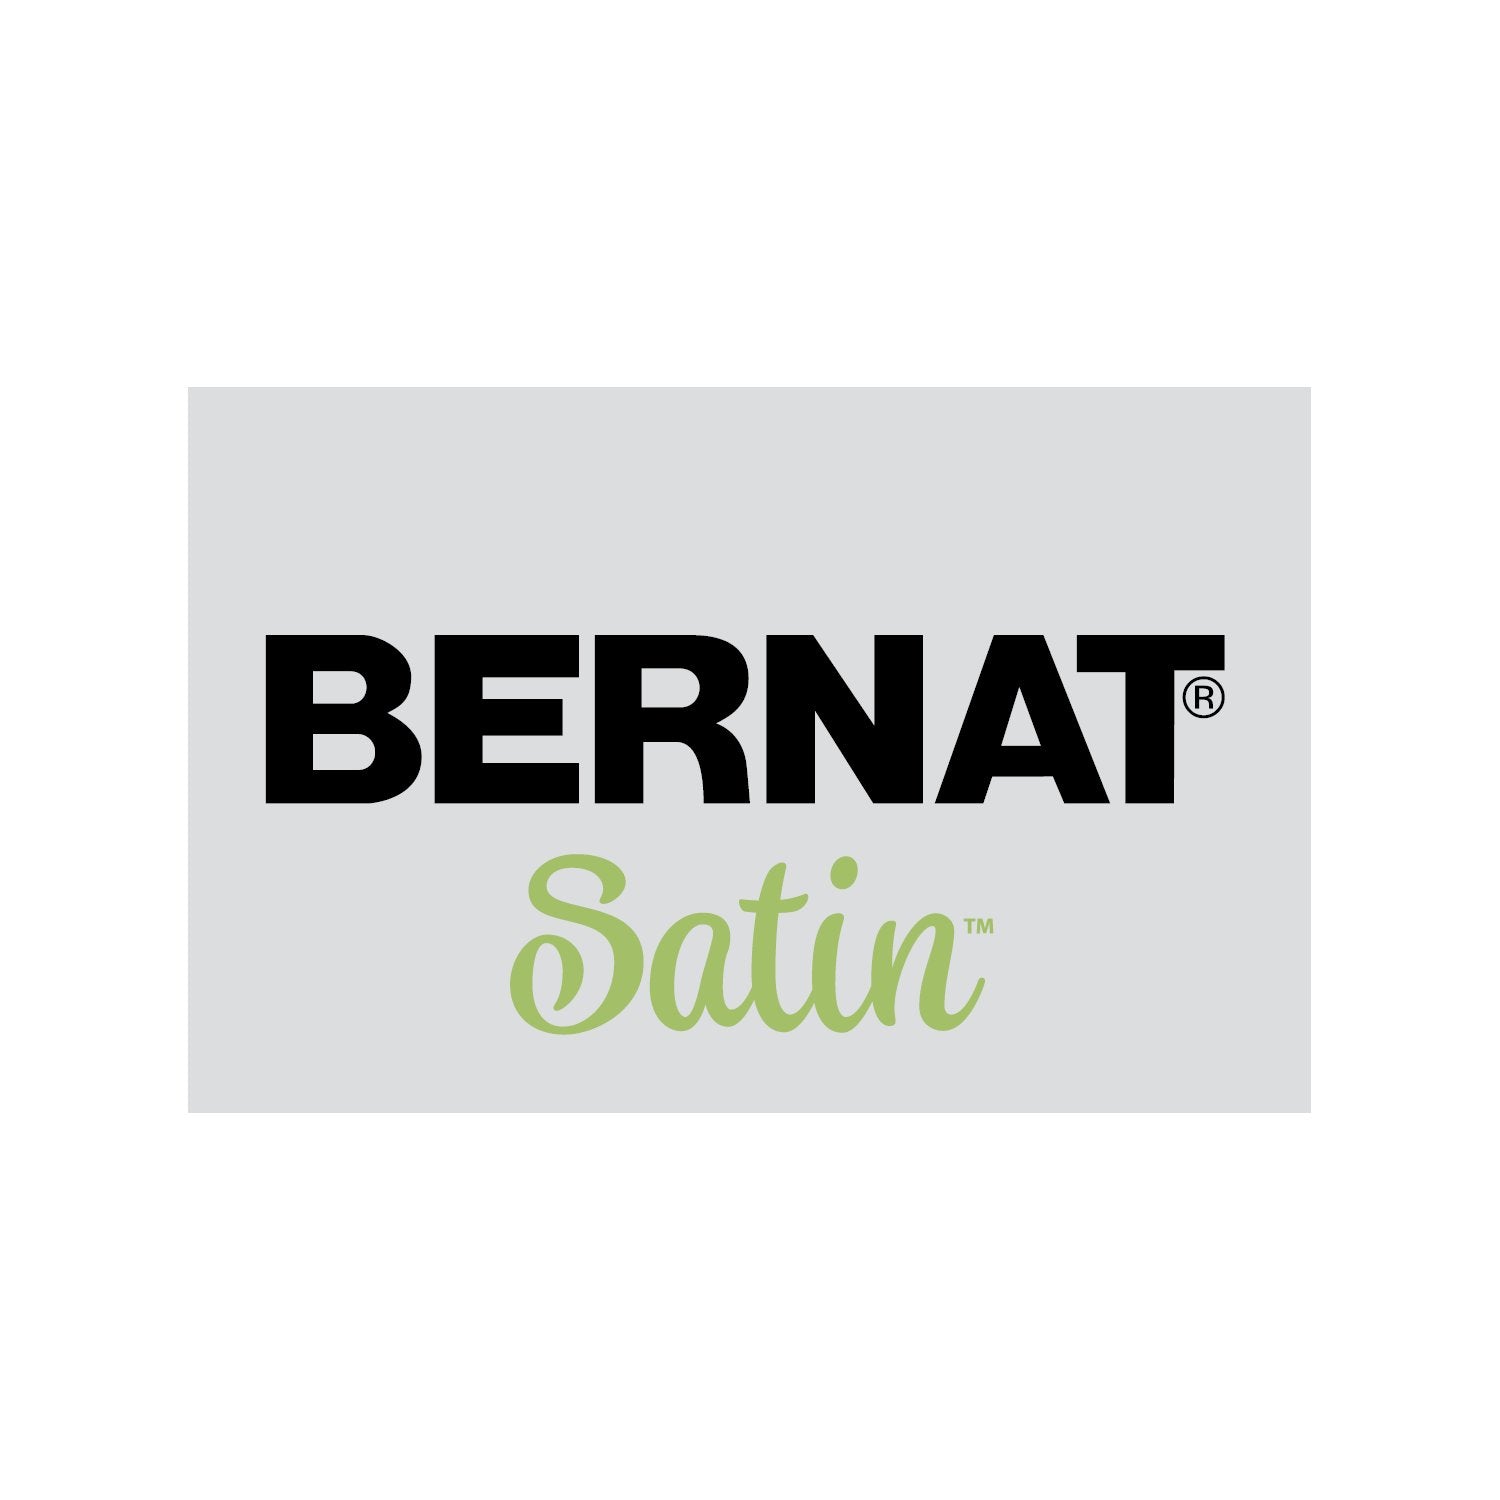 Bernat® Satin Yarn